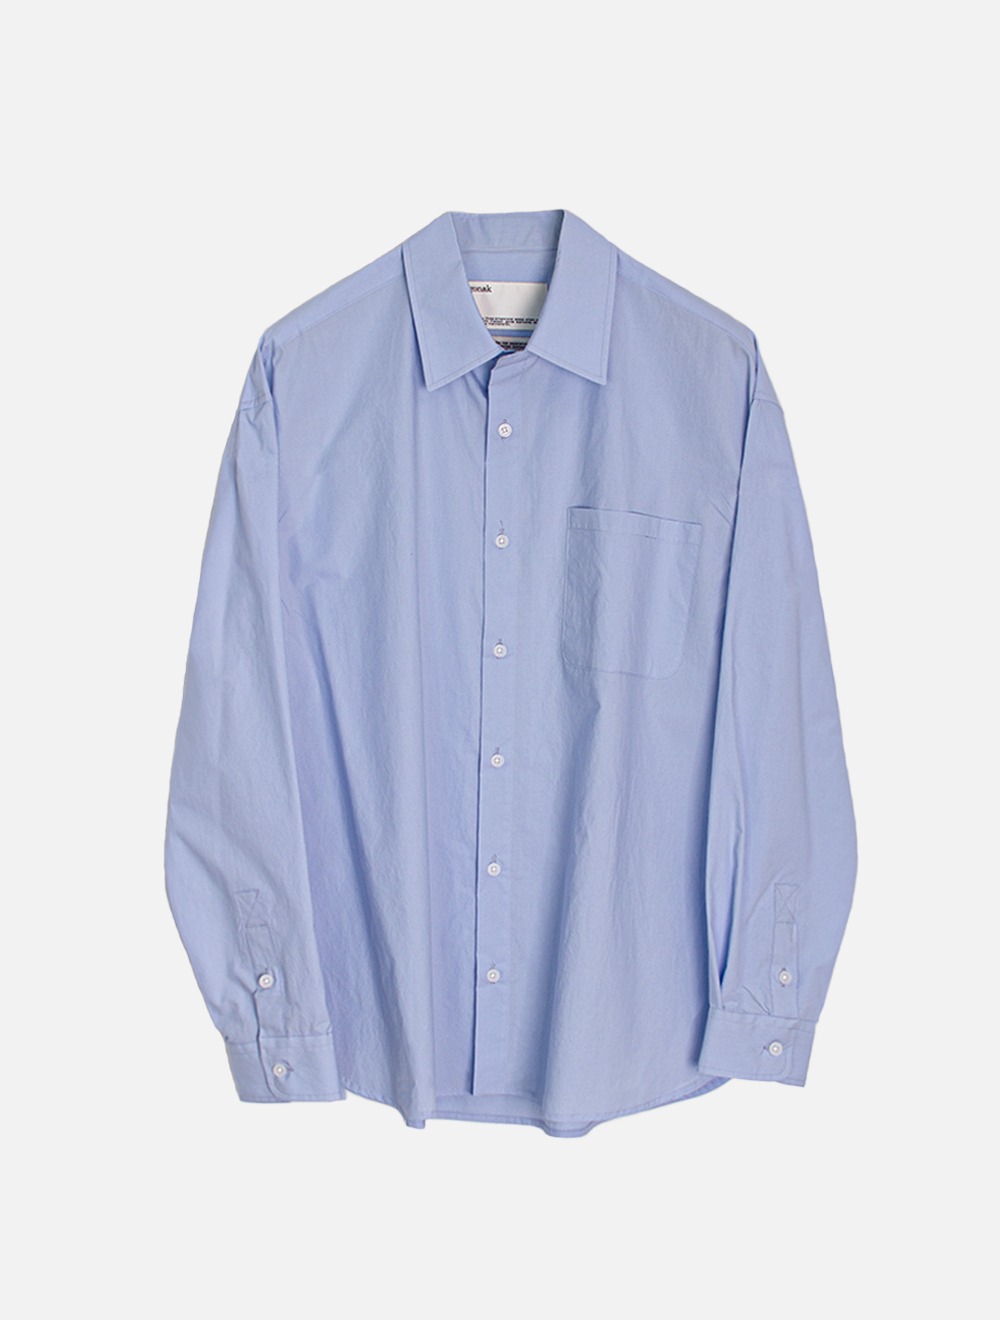 sage cotton shirt (blue)